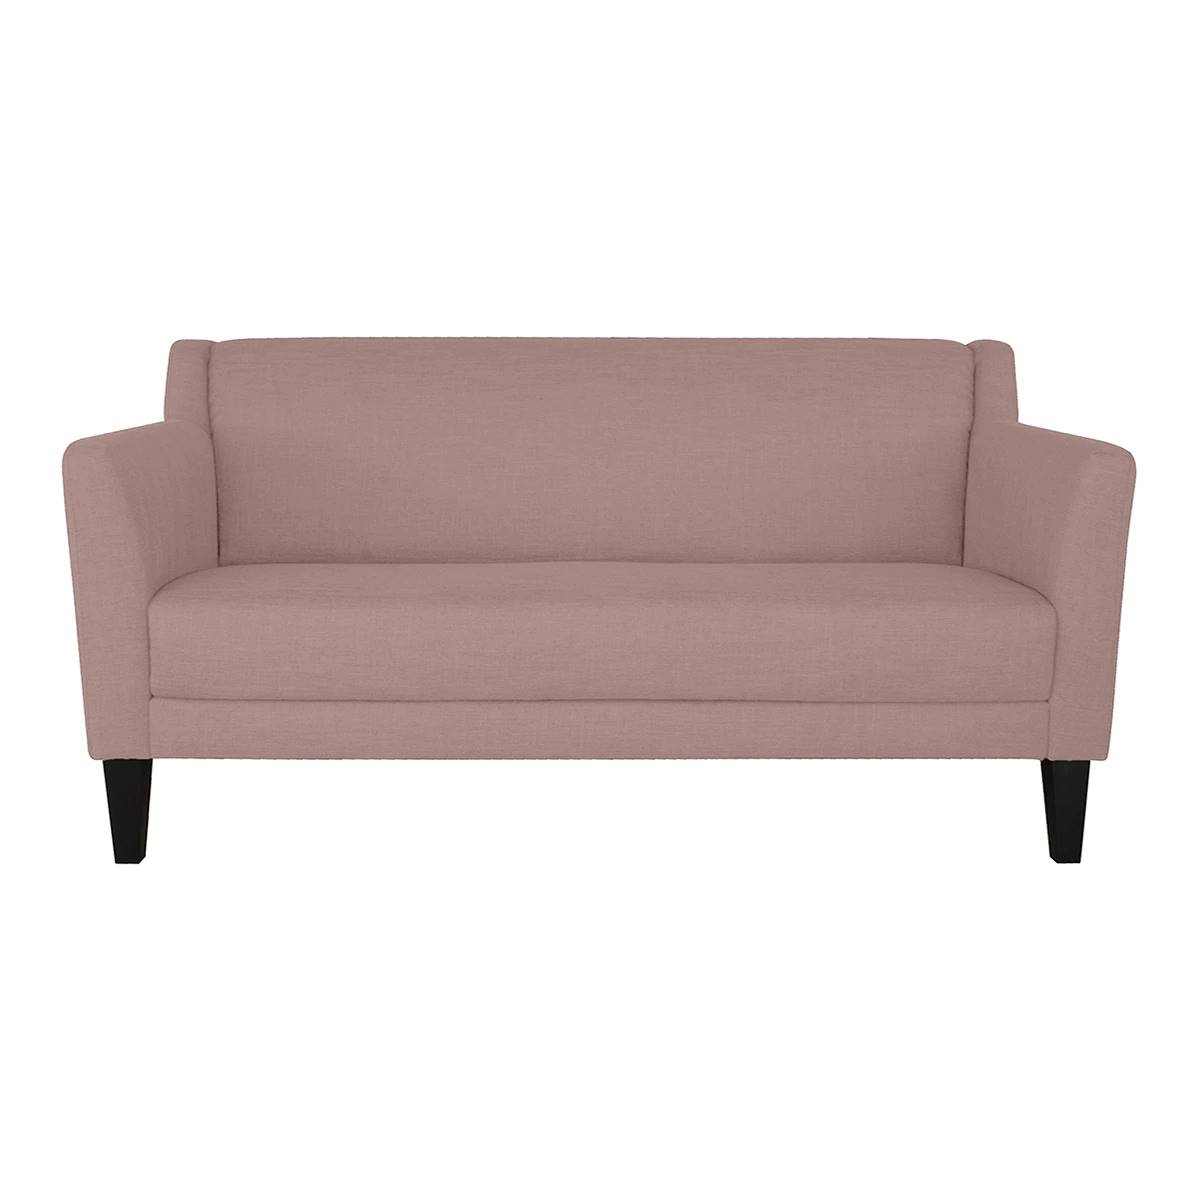 sofa-tapizado-de-3-plazas-cairo-el-corte-ingles